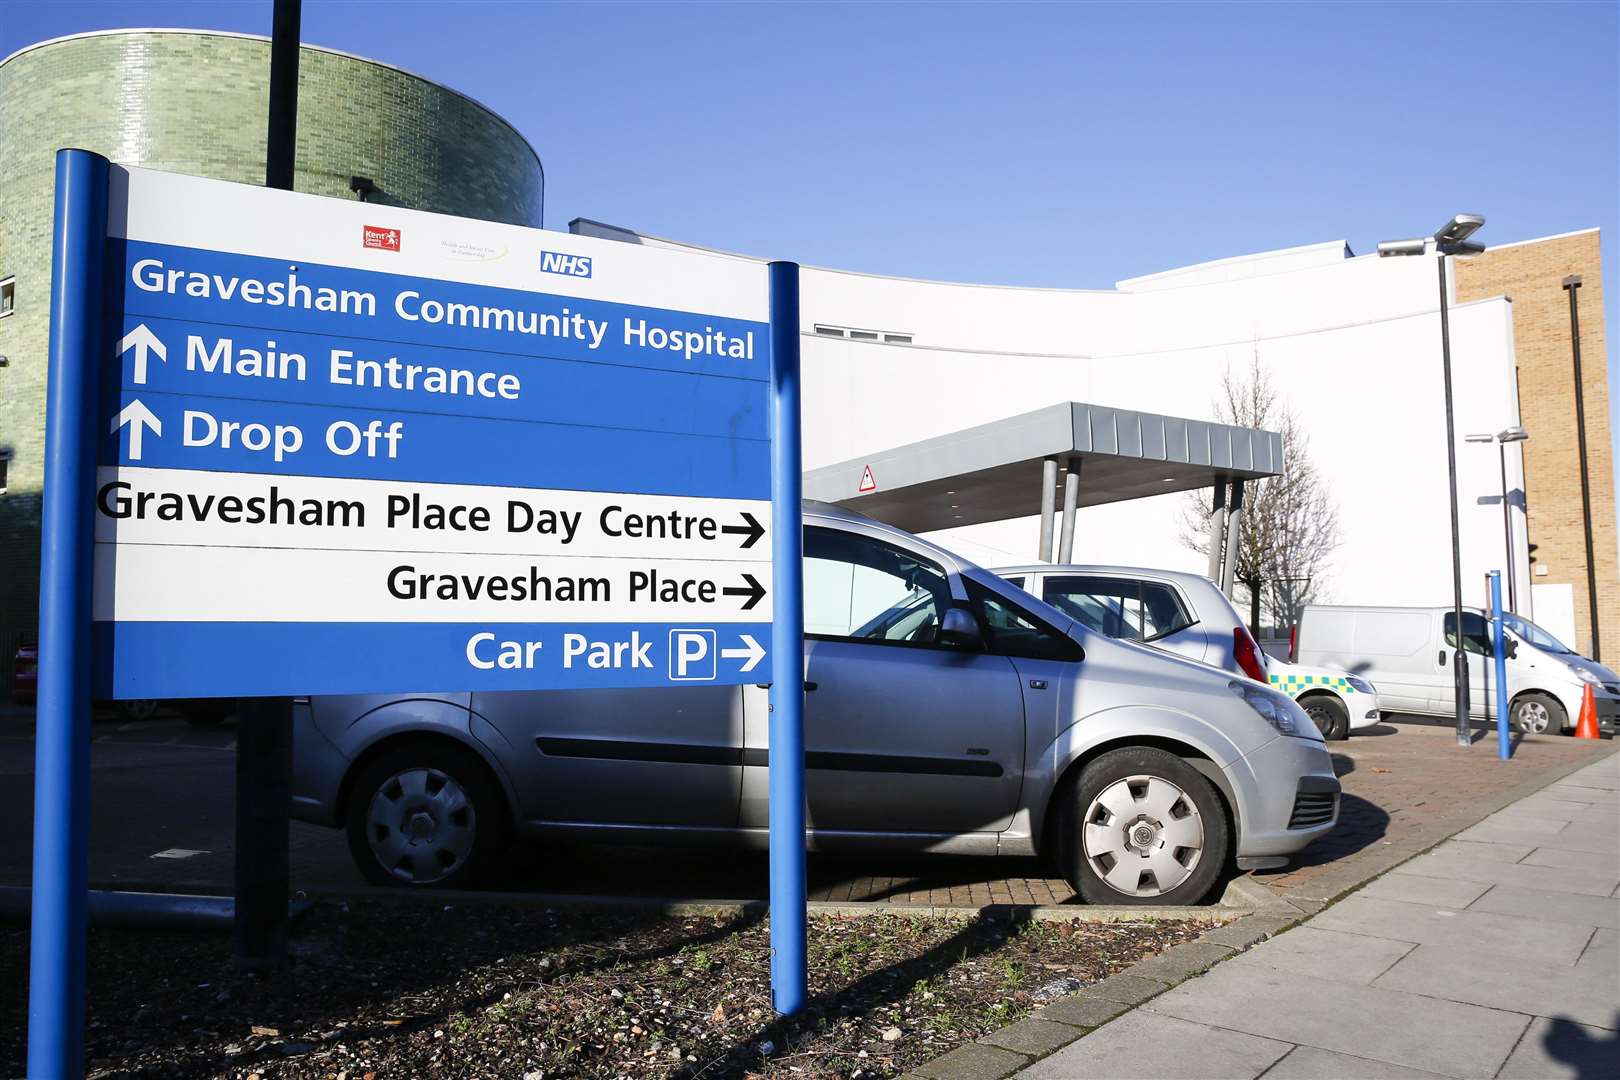 The Gravesham Community Hospital, Bath Street, Gravesend. STOCK IMAGEPicture: Martin Apps FM4180597 (8045591)